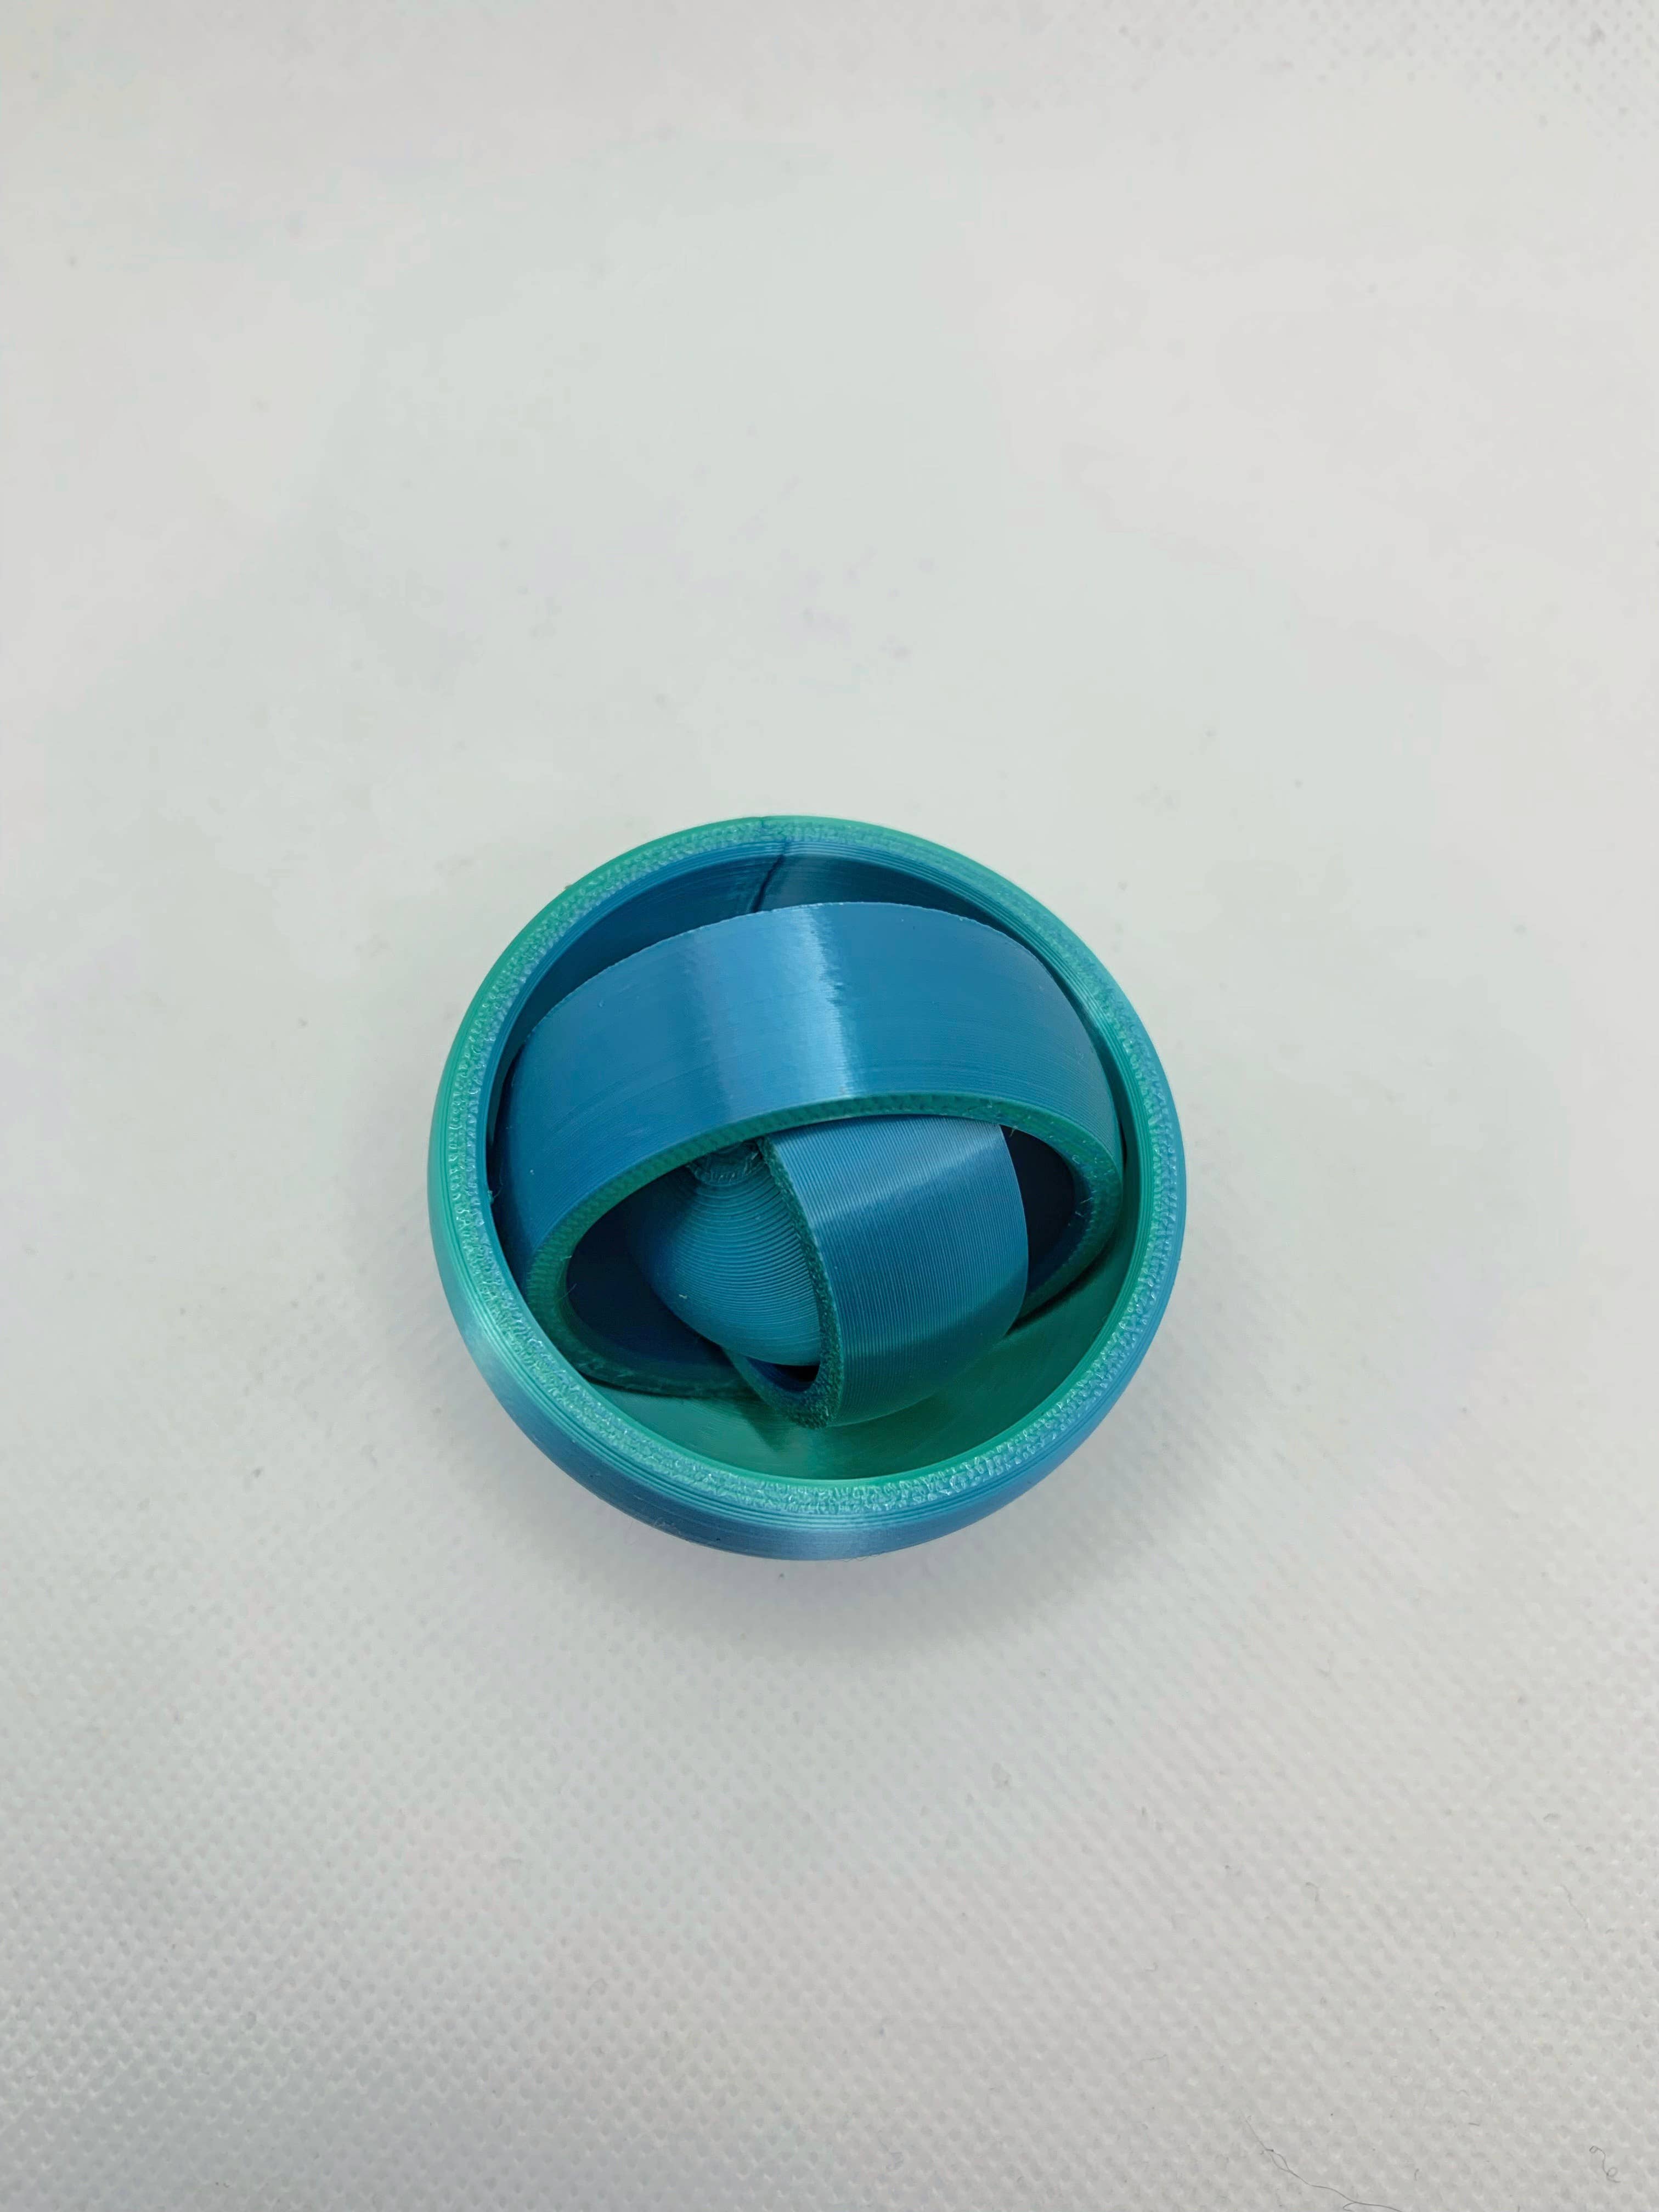 Gyroscope Fidget Spinner - Sea Glass (Blue/Green)